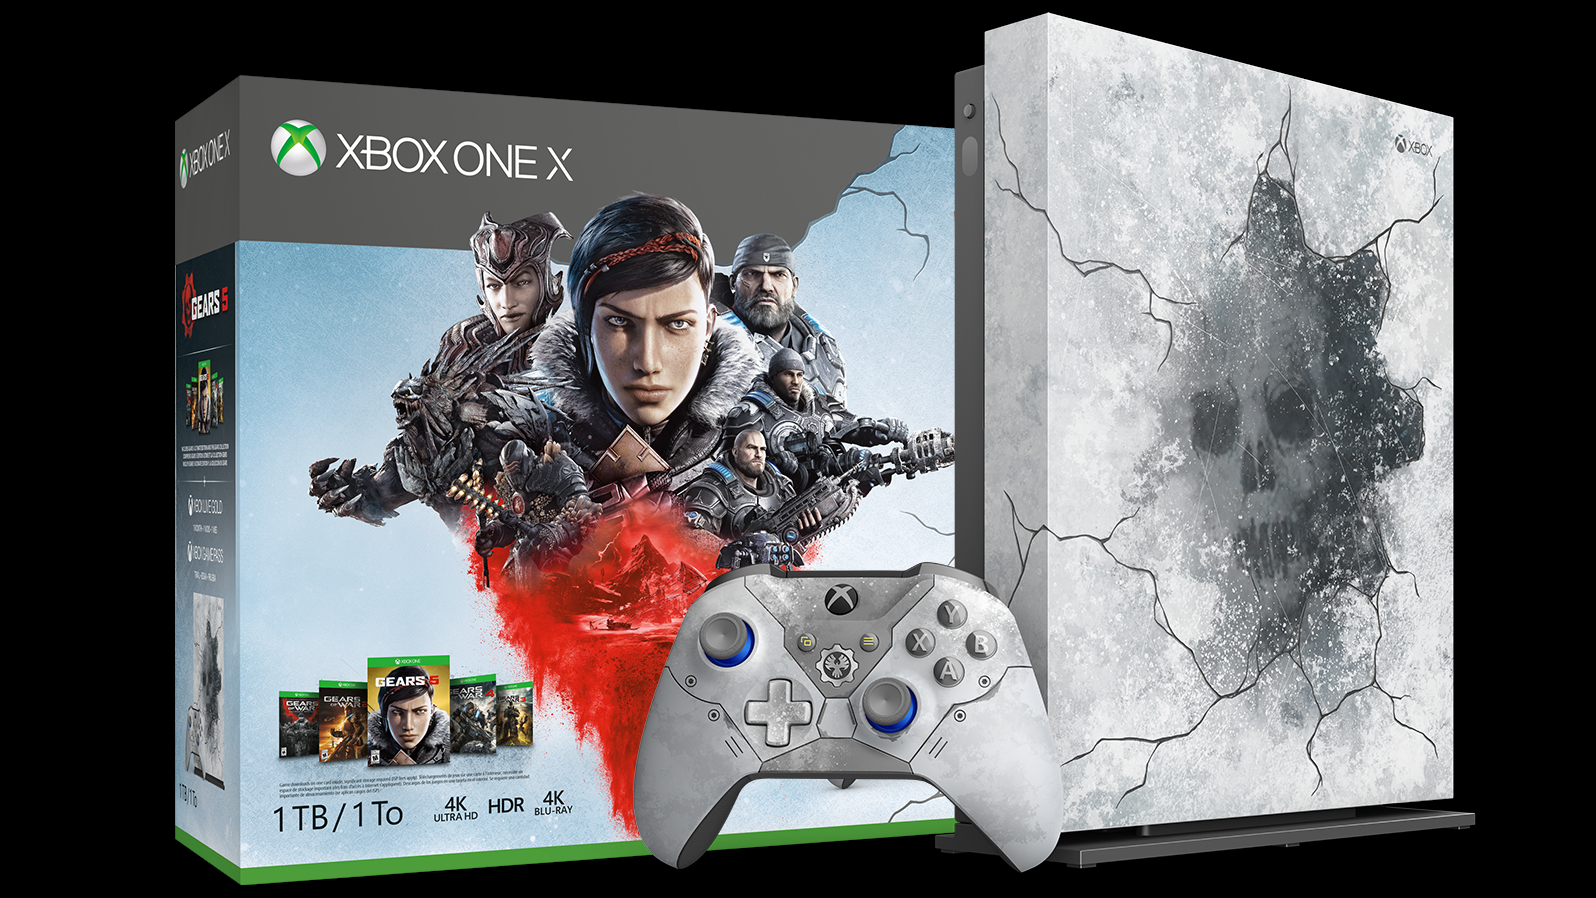 Rubí Cordelia Intolerable A Gears of War 5 special edition Xbox One X is coming | TechRadar